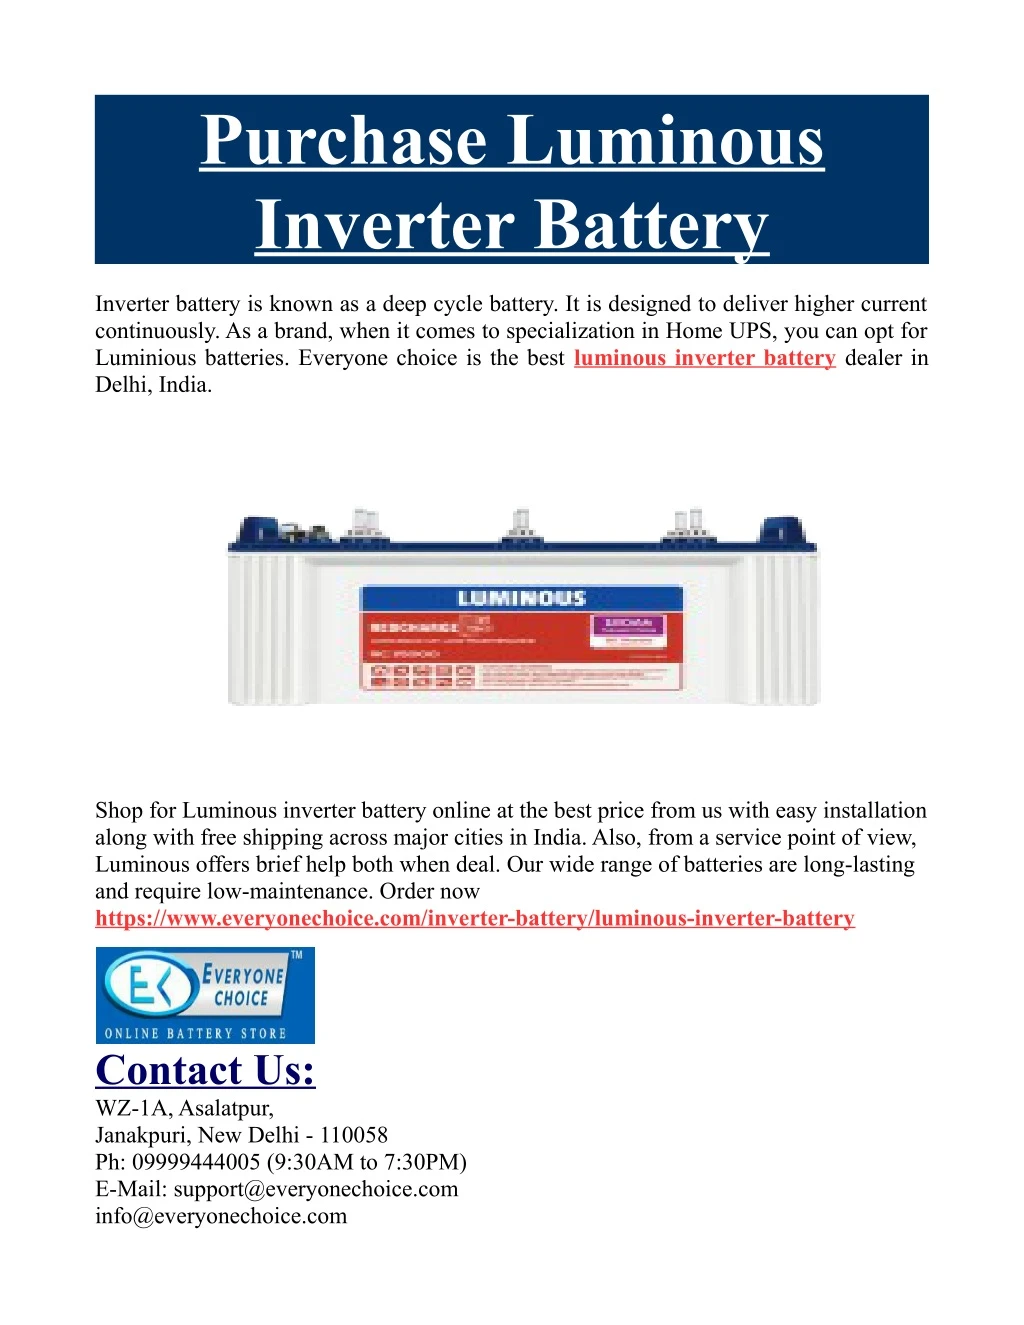 purchase luminous inverter battery